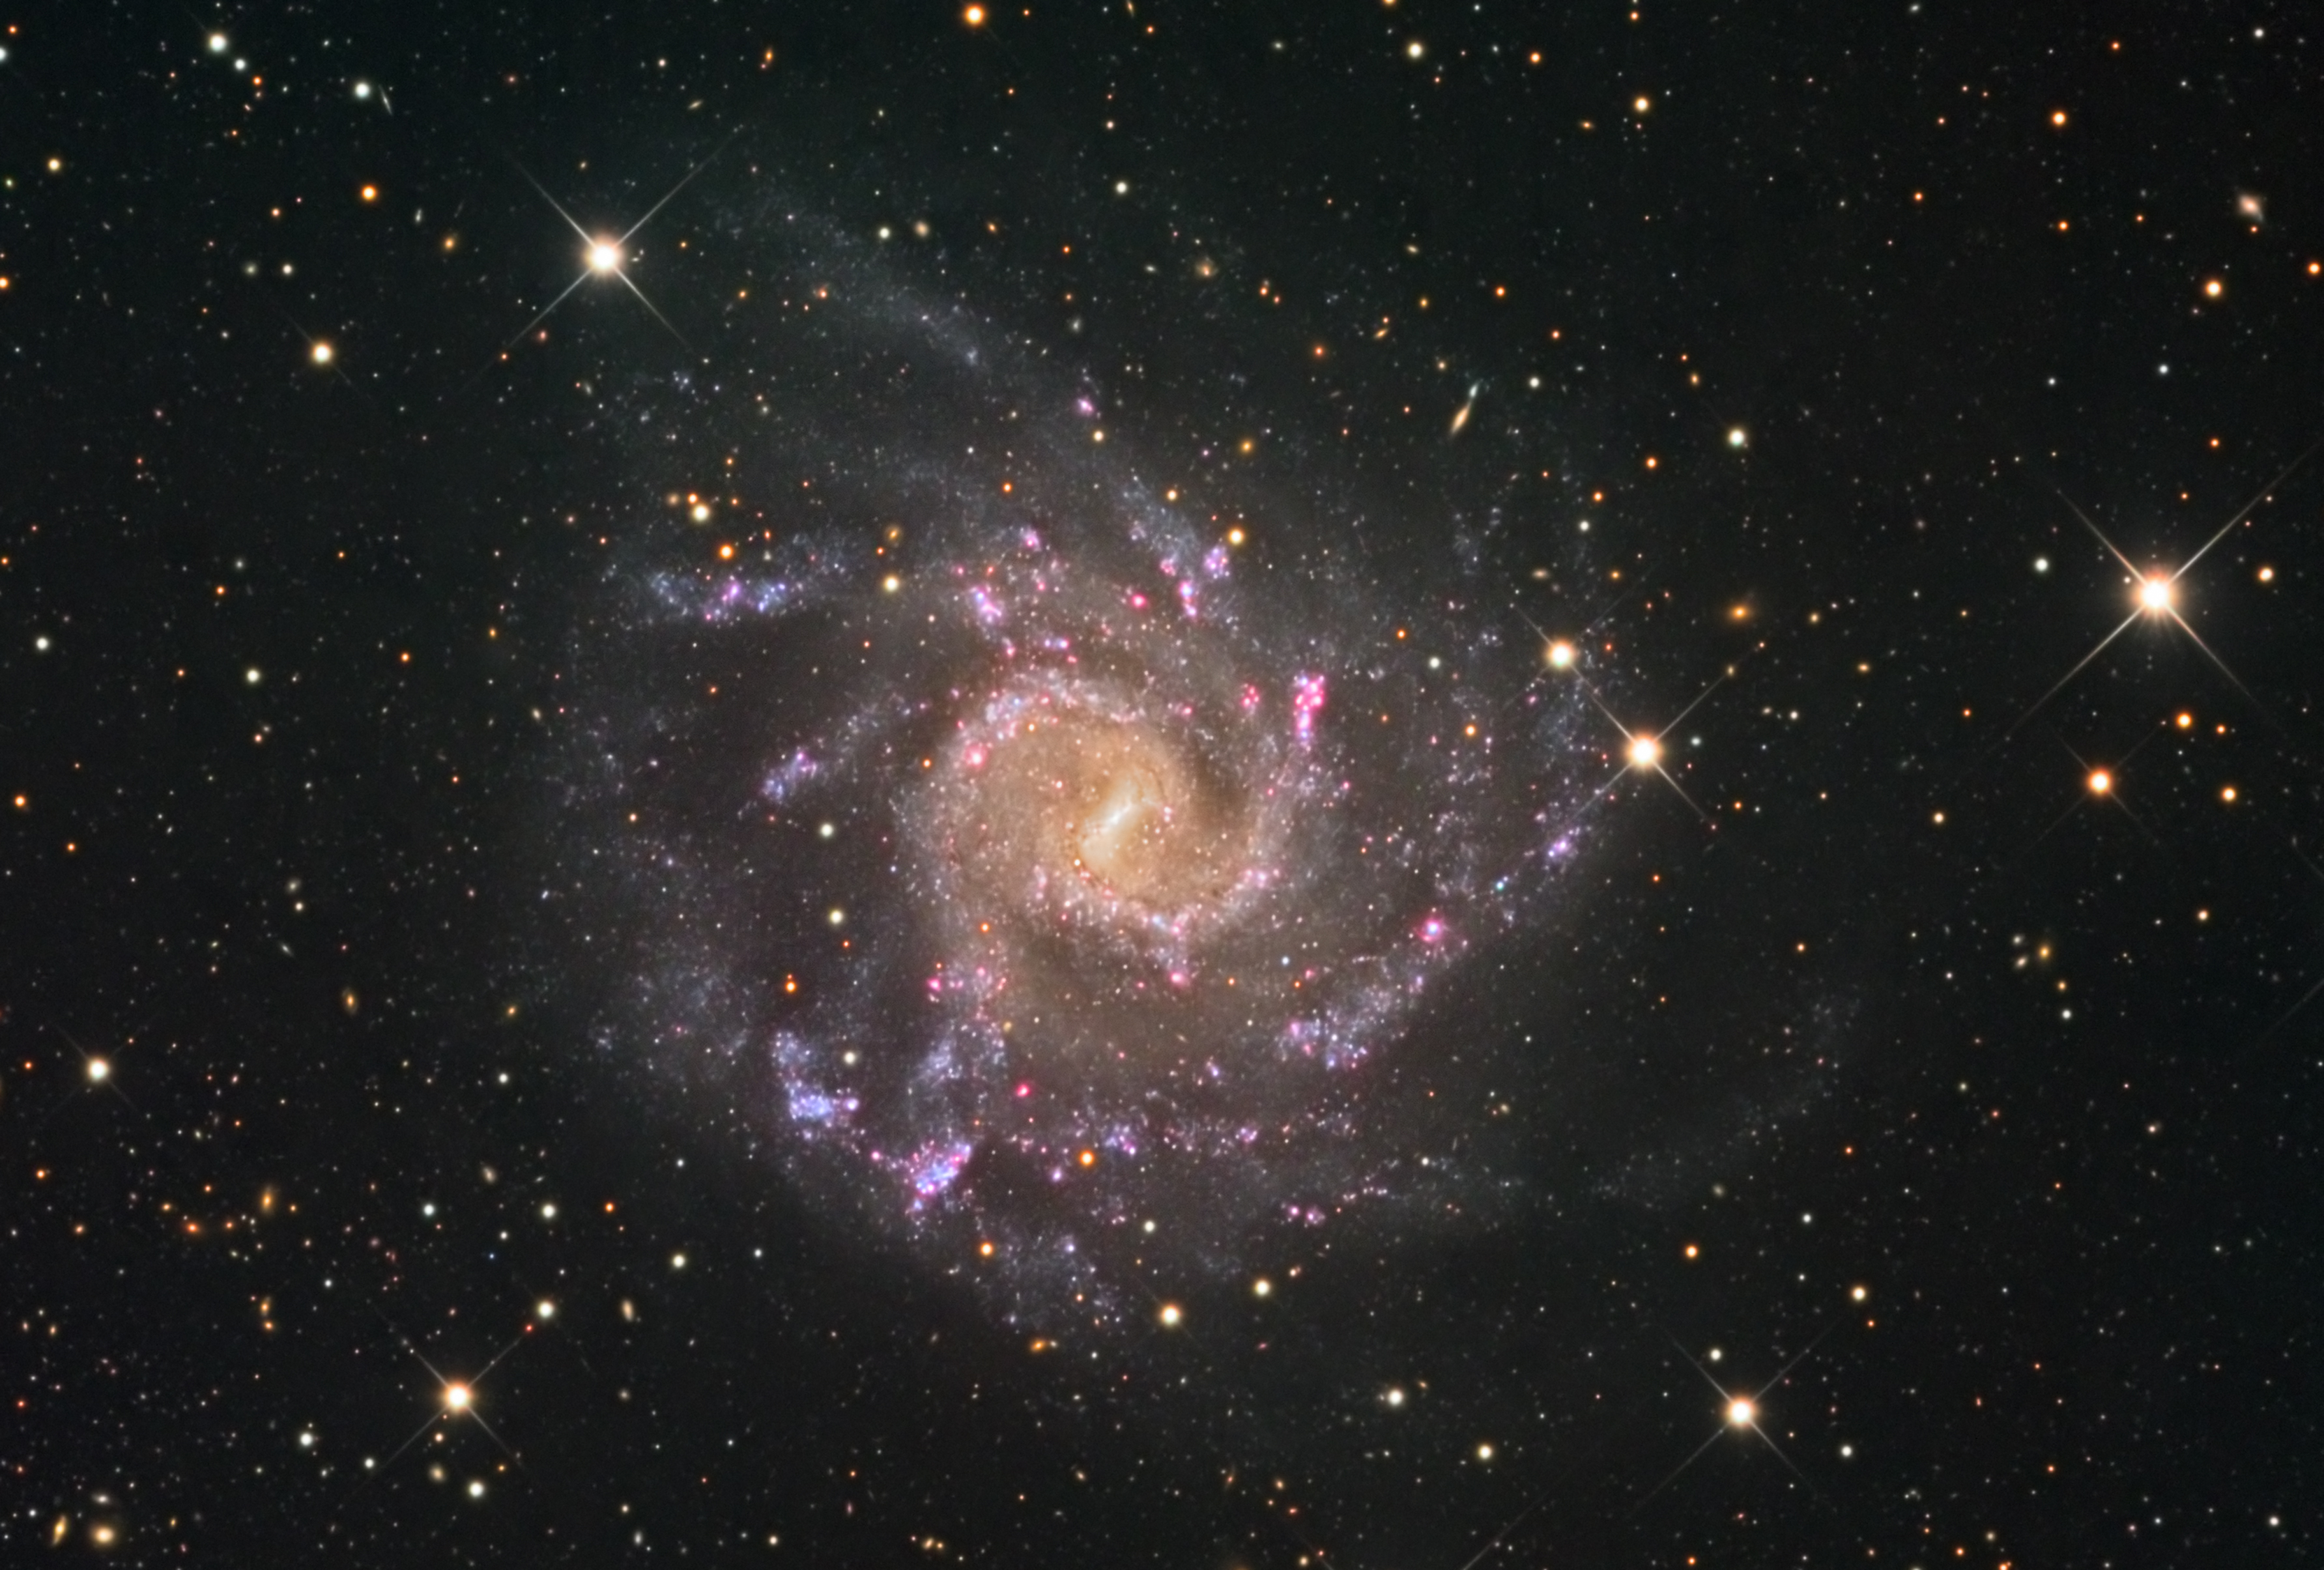 La grande galaxie spirale NGC 7424